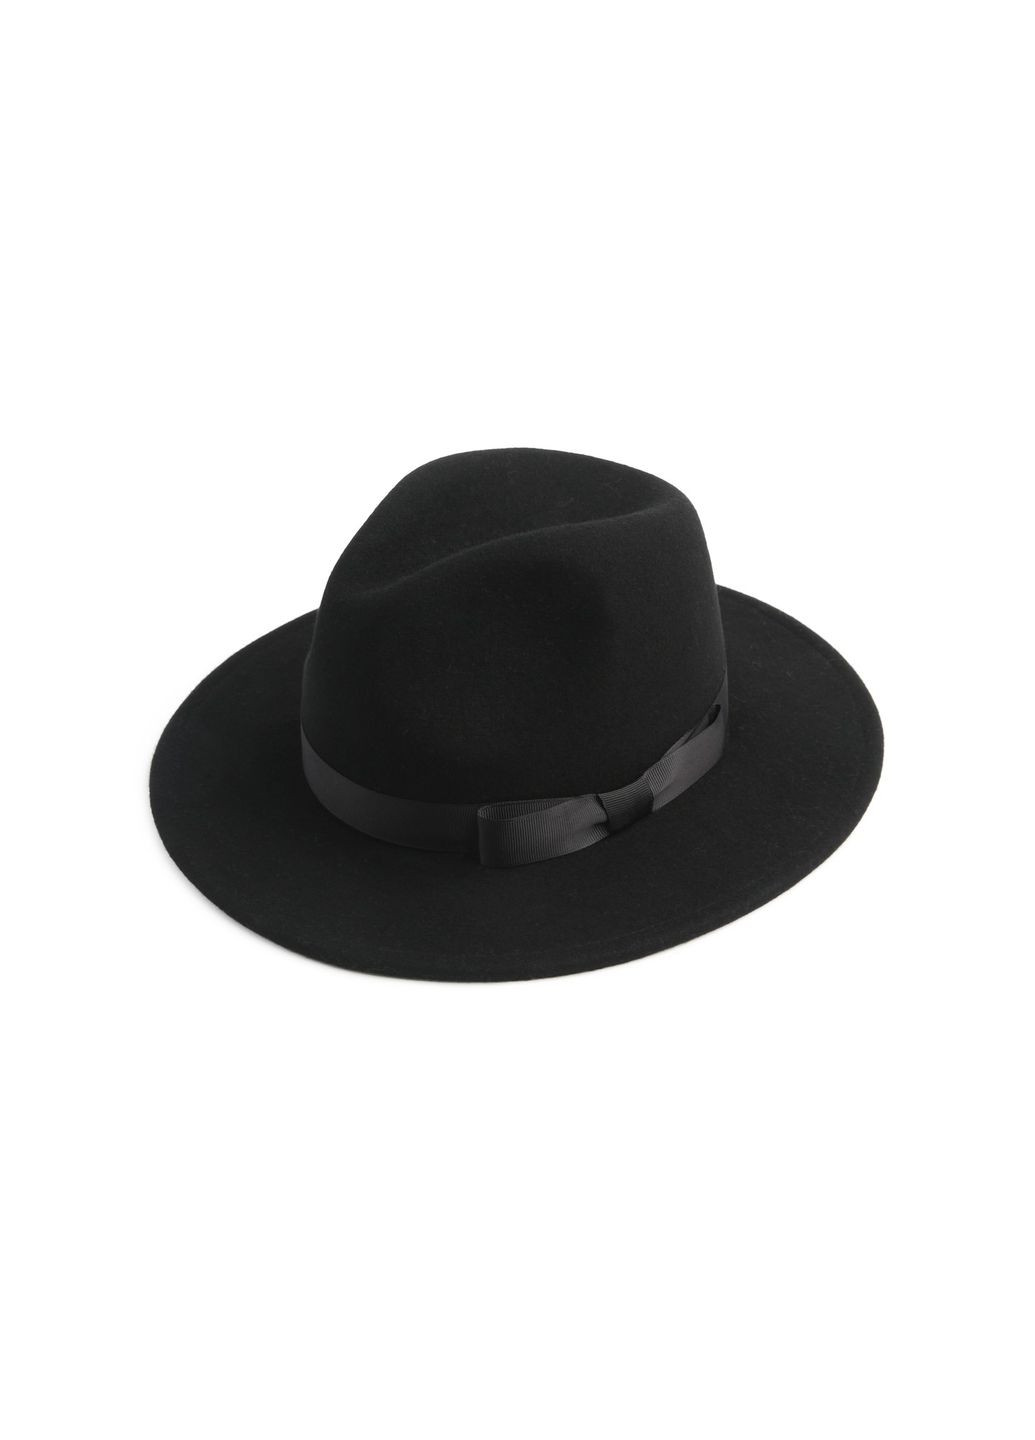 Шляпа федора мужская с лентой фетр черная 659-941 LuckyLOOK 659-941m (289360618)